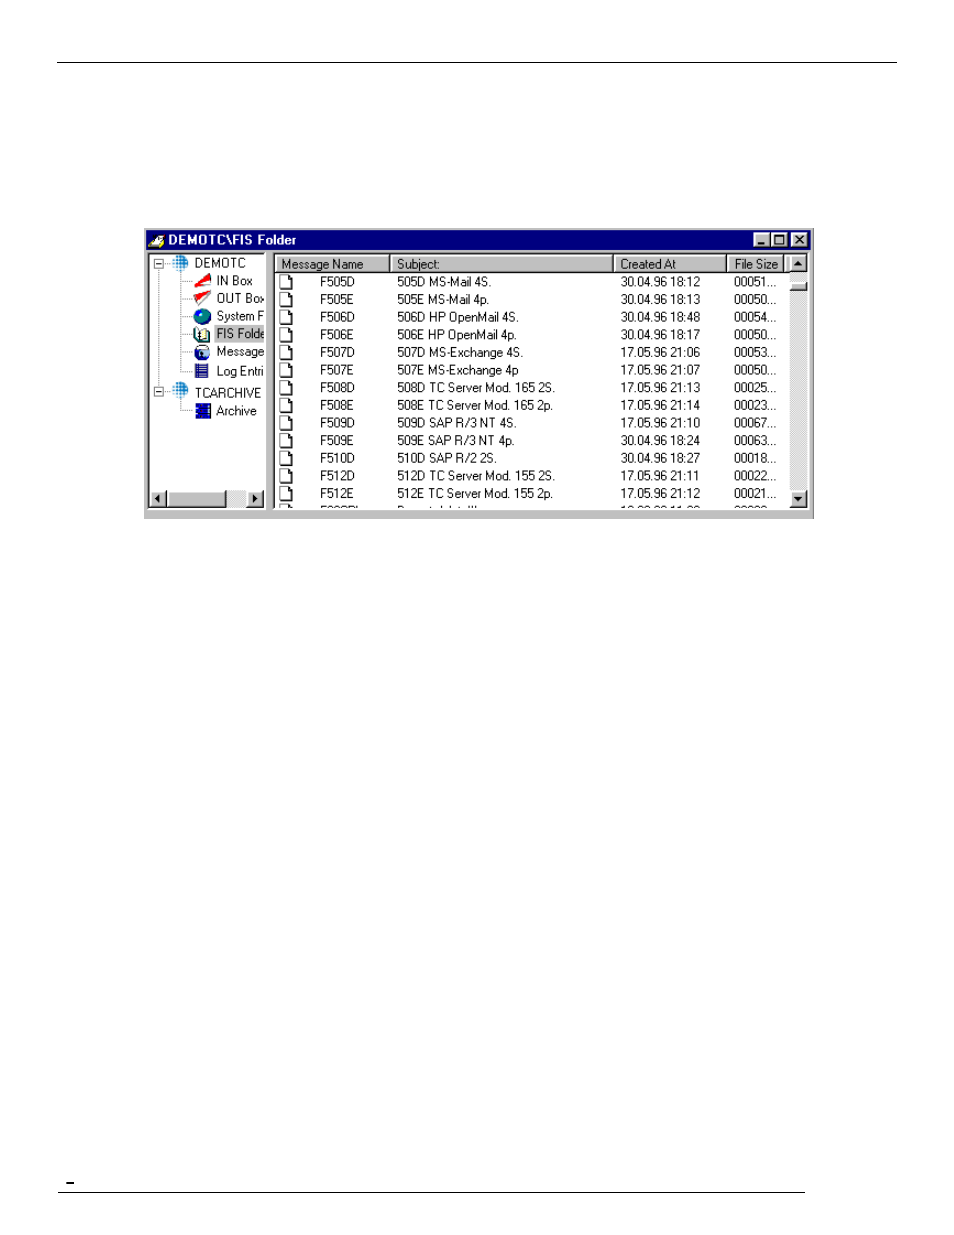 6 fis folder, 7 private folders | Kofax Communication Server 9.1.1 User Manual | Page 84 / 114